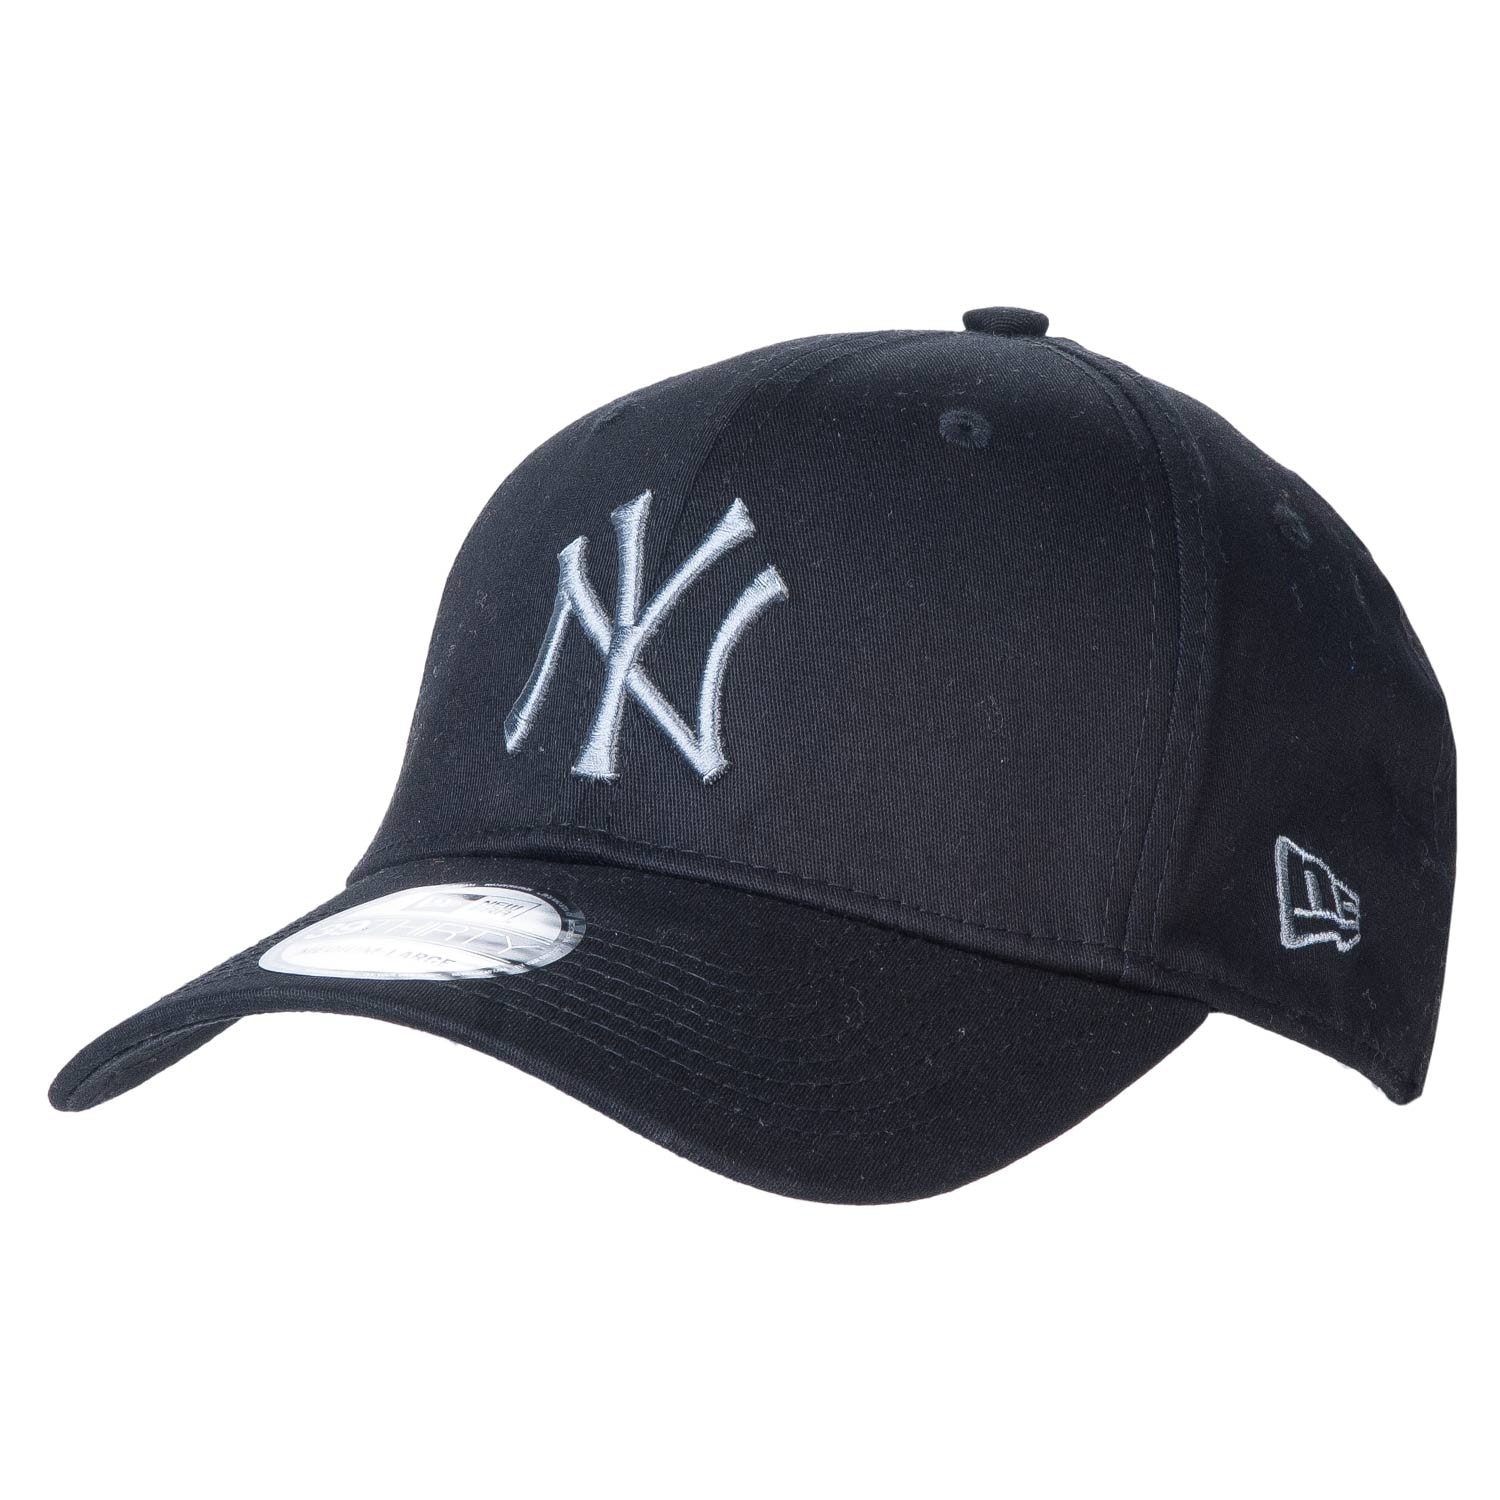 New York Yankees Black 39THIRTY Cap